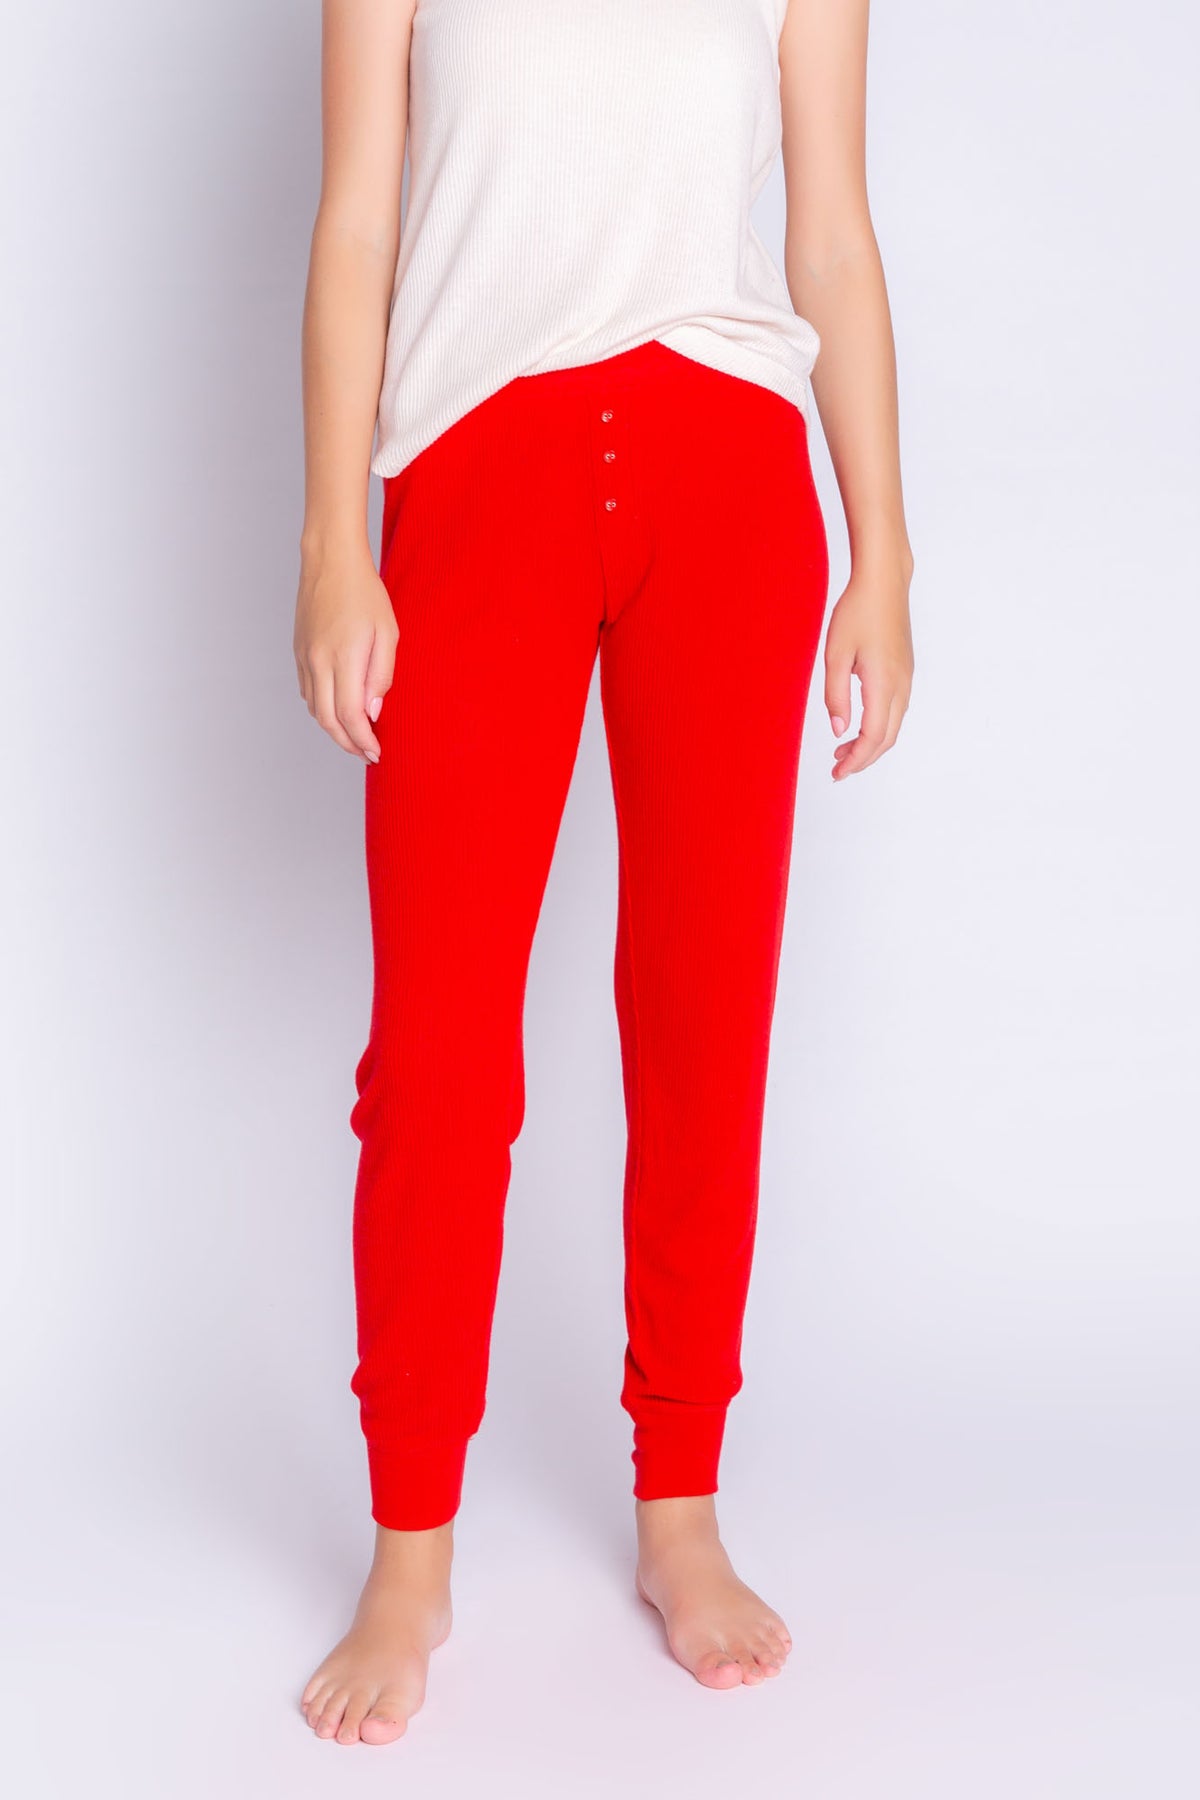 PJ SALVAGE Womens Port Wine Red Super Soft Stretch Lounge Pants